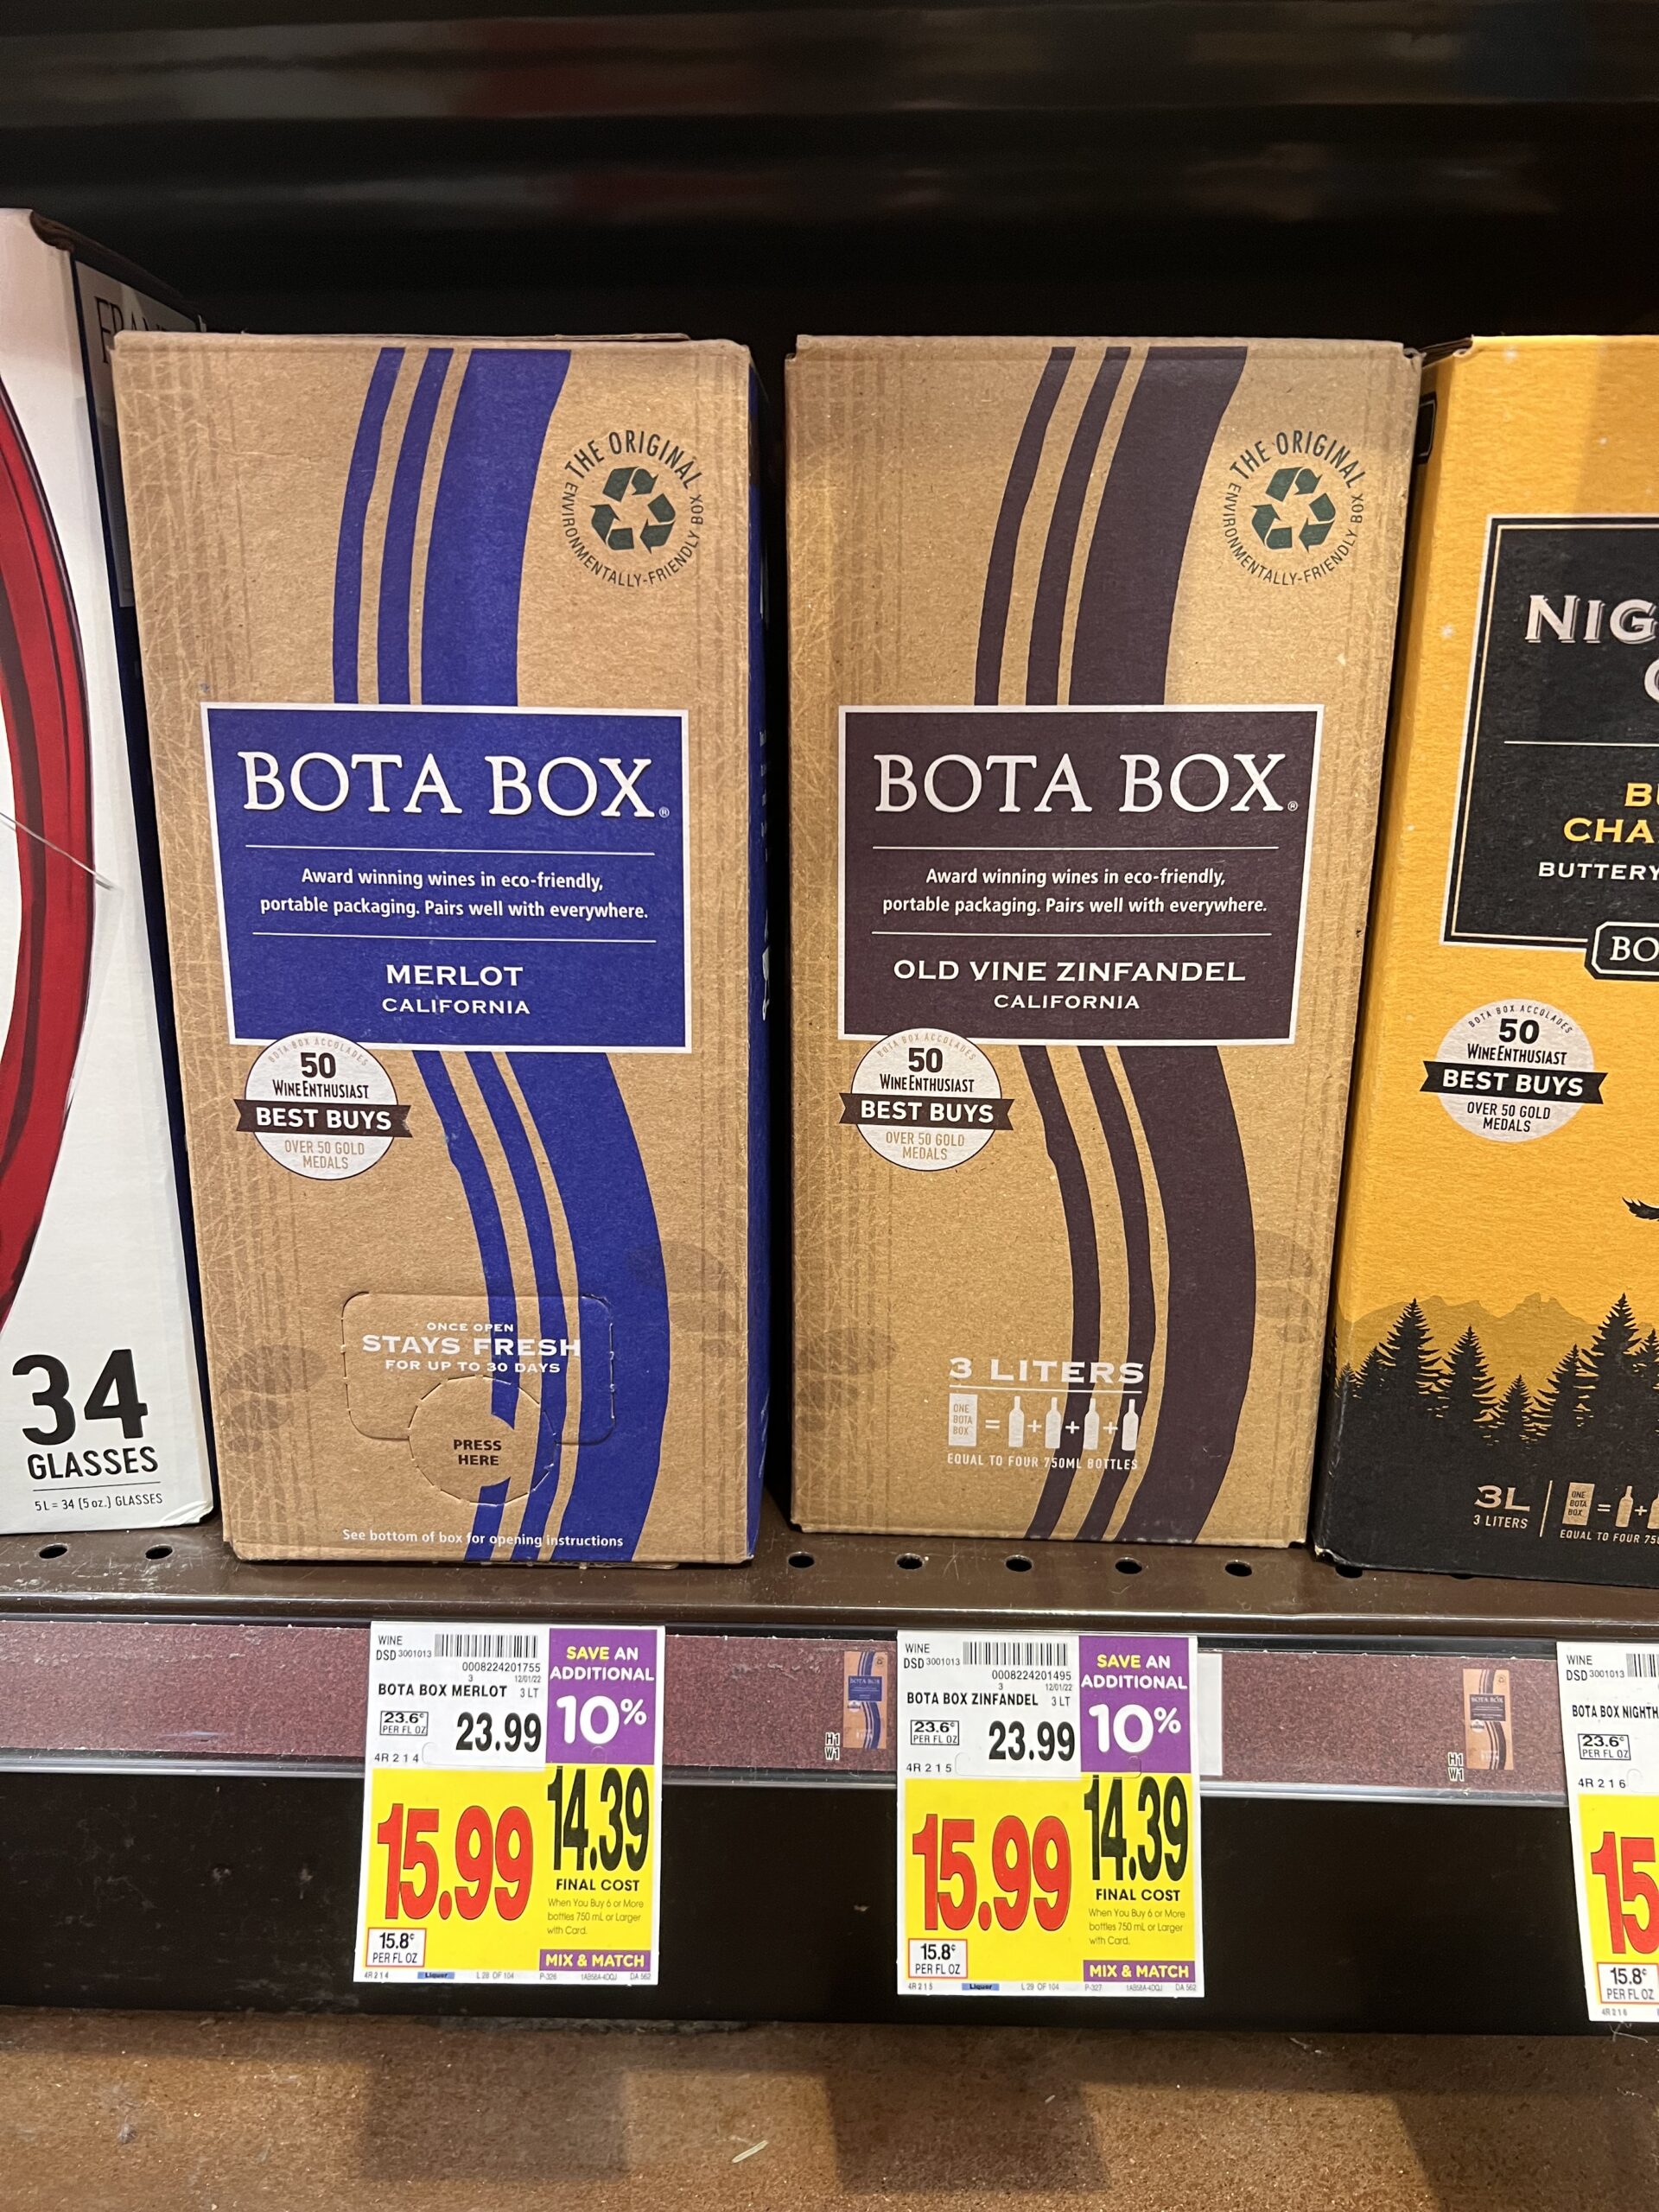 bota box wine kroger shelf image 1